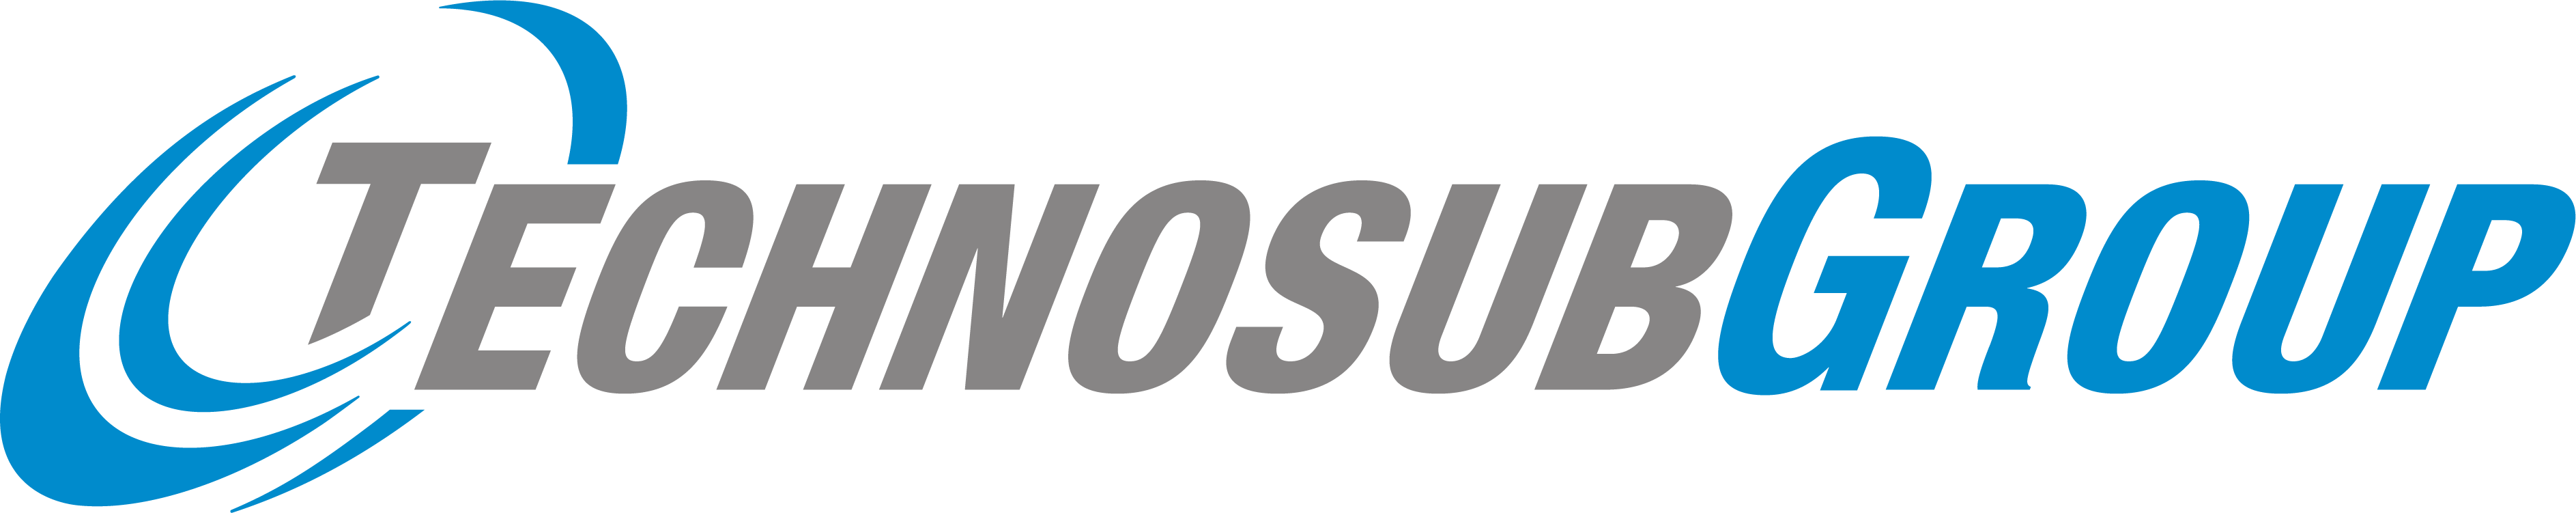 Technosub Group logo